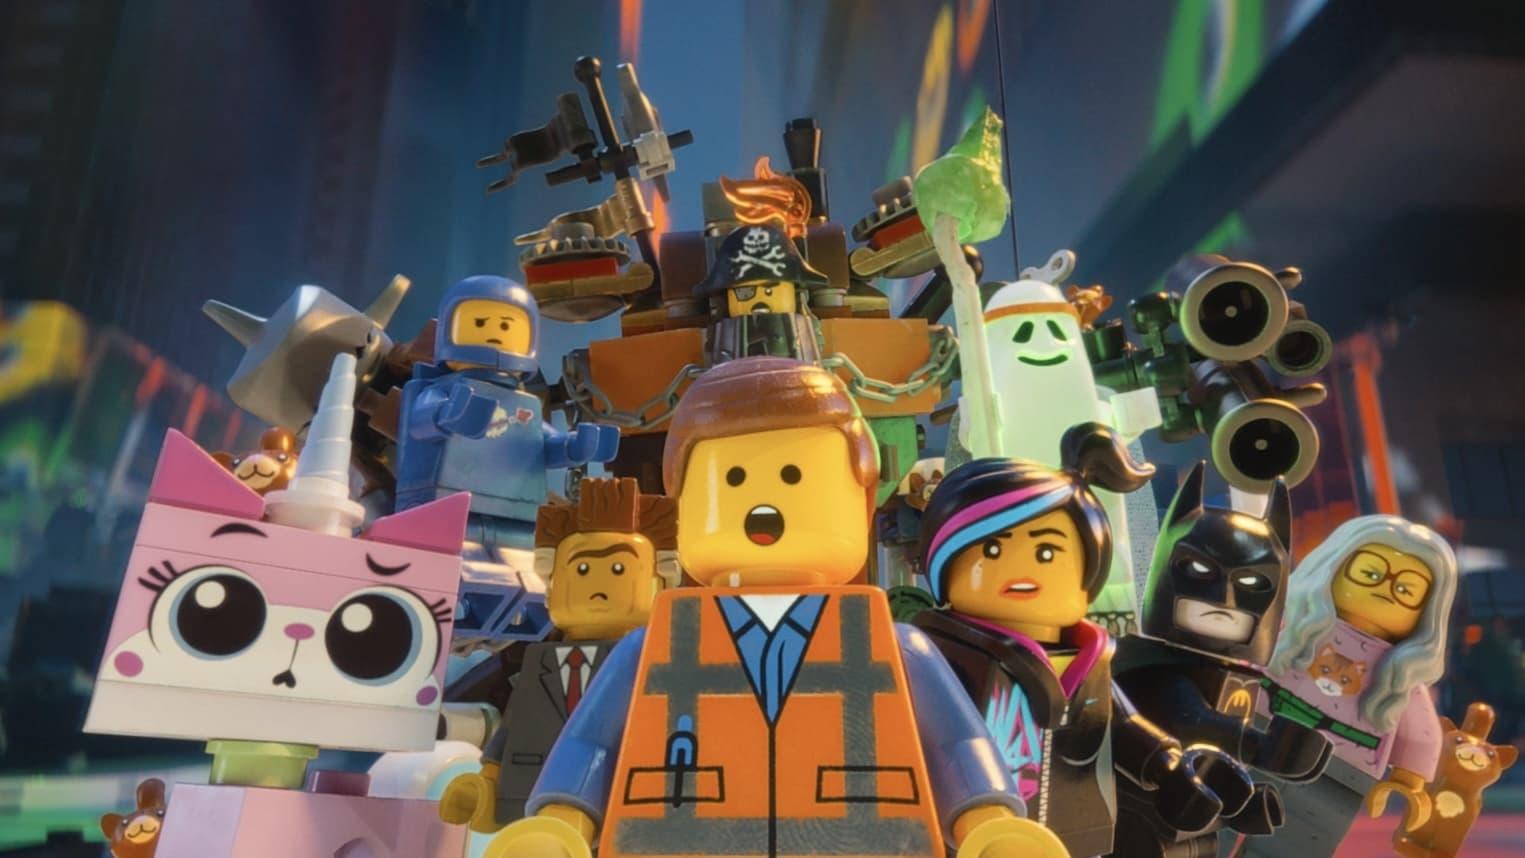 The Lego Movie backdrop